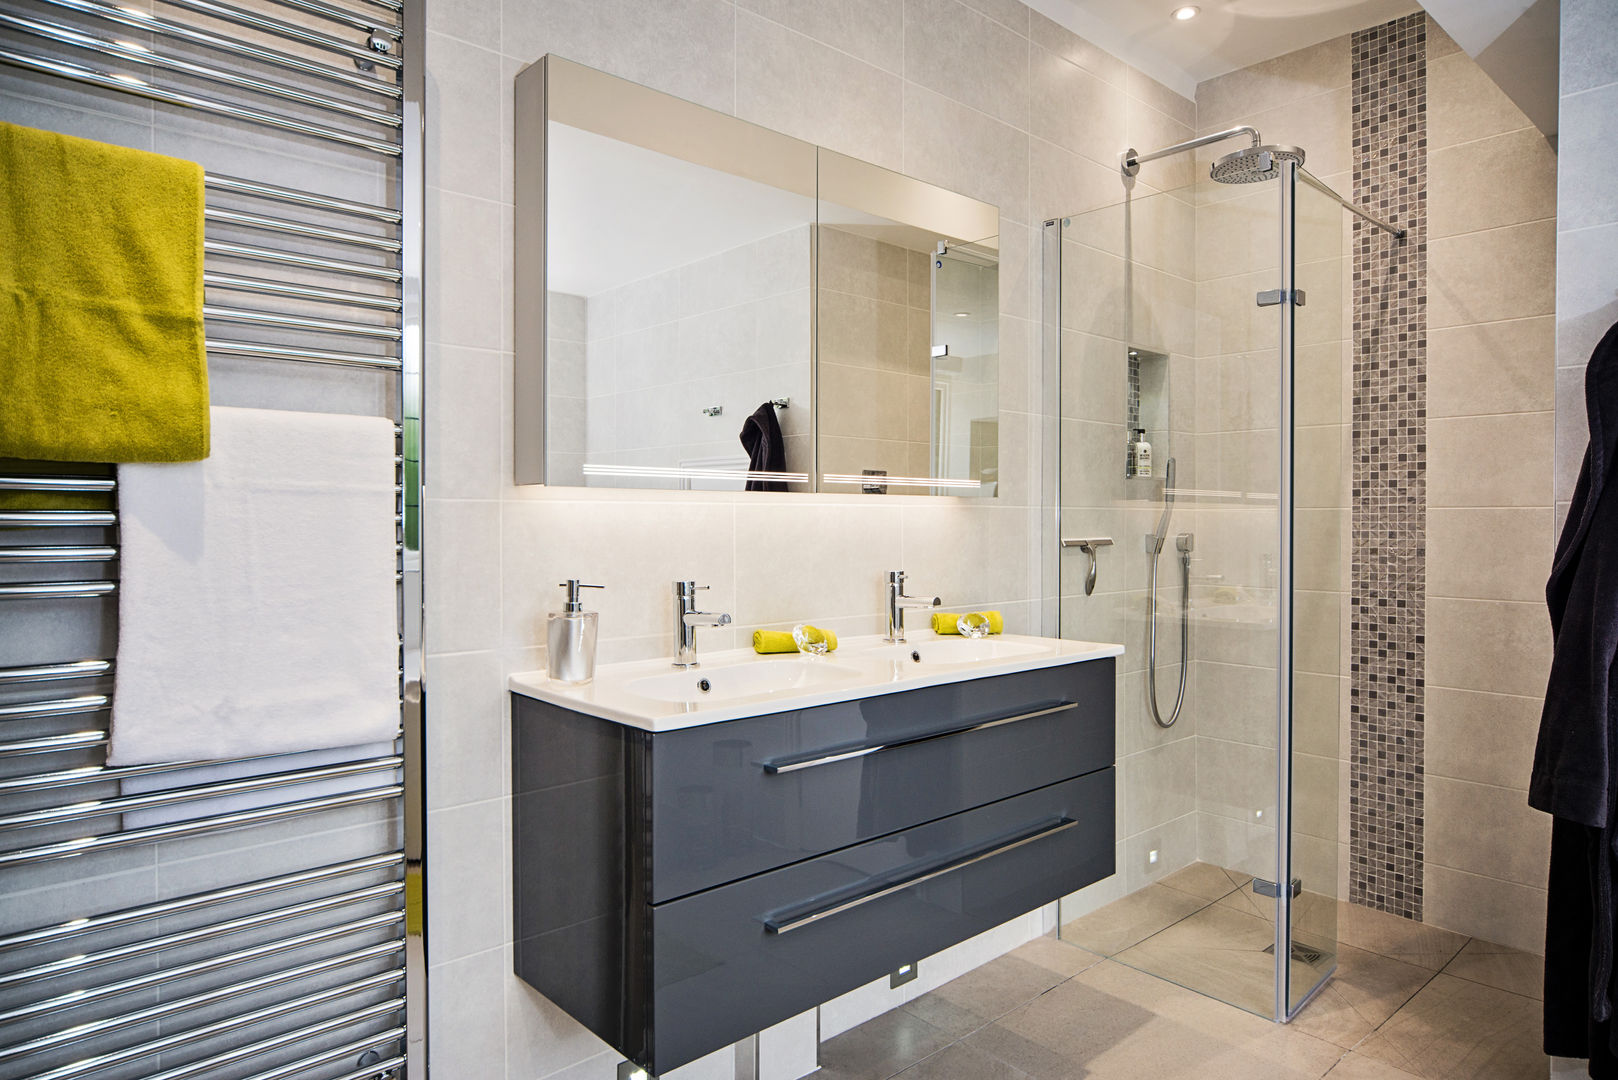 Mr & Mrs D, En-Suite, Guildford Raycross Interiors Modern style bathrooms bathroom design,installation,mosaic tiles,walk-in shower,free-standing bath,mirror cabinet